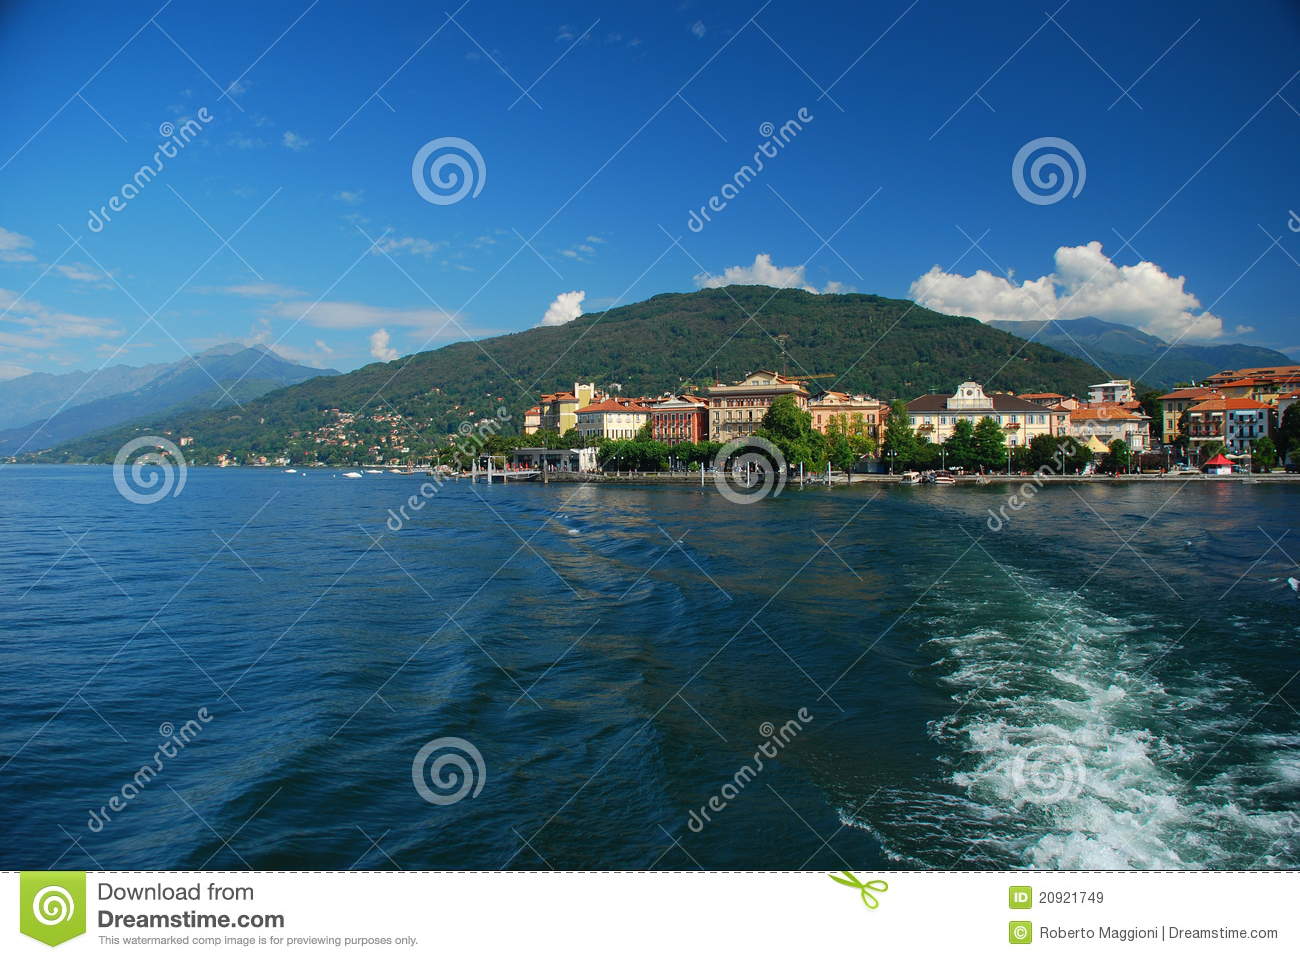 Verbania Pallanza, Lake Maggiore, Italy Royalty Free Stock Images.